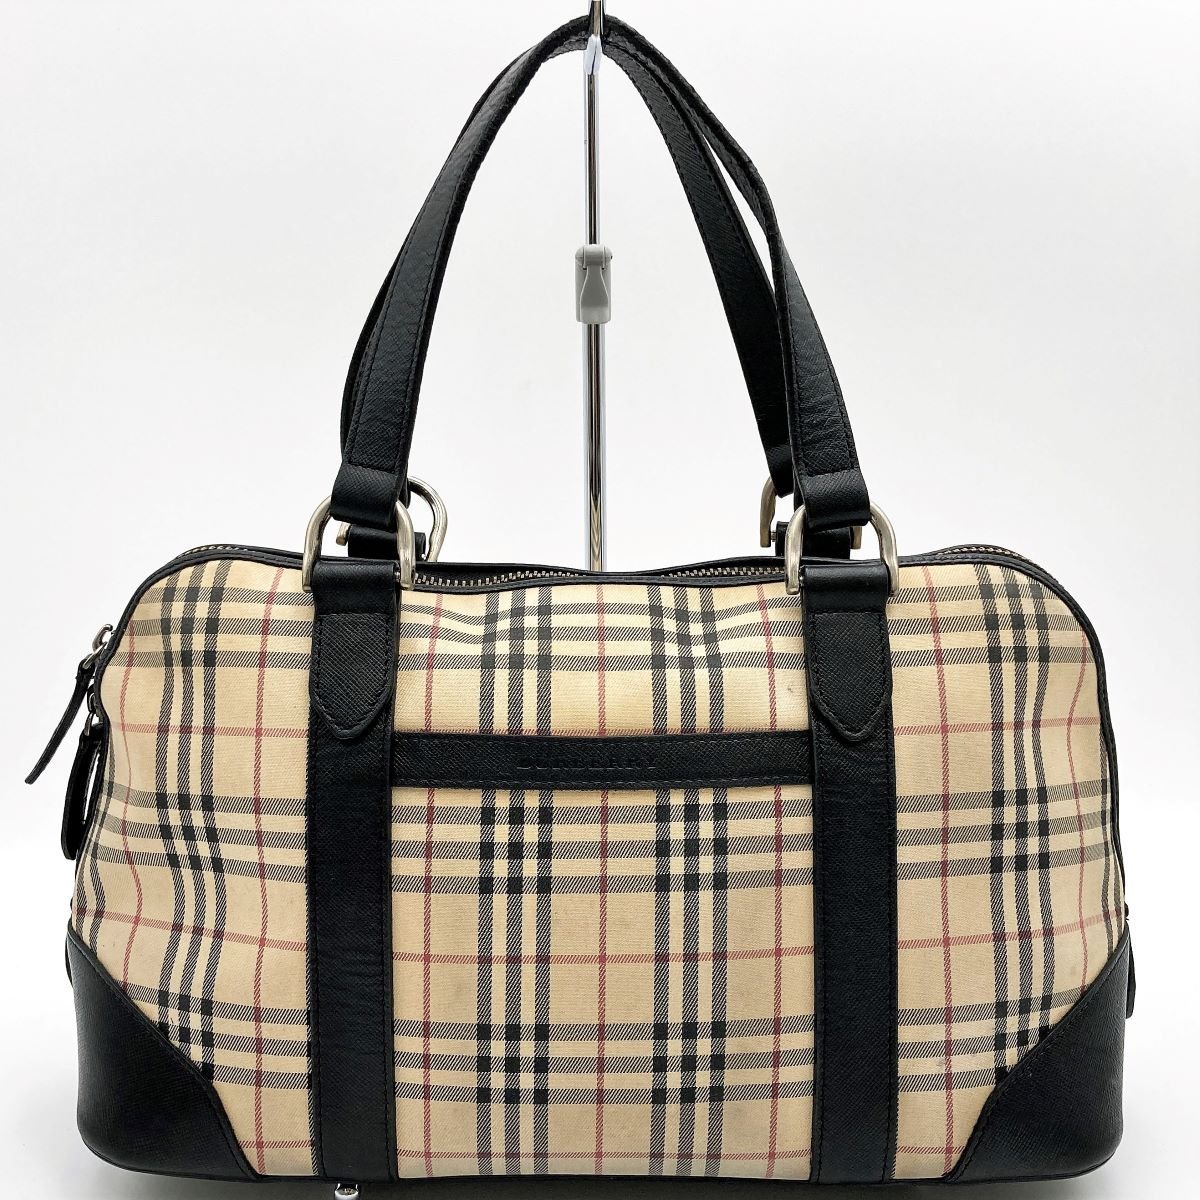 BURBERRY Burberry сумка "Boston bag" Mini Boston путешествие сумка сумка noba проверка бежевый × черный парусина женский мужской USED